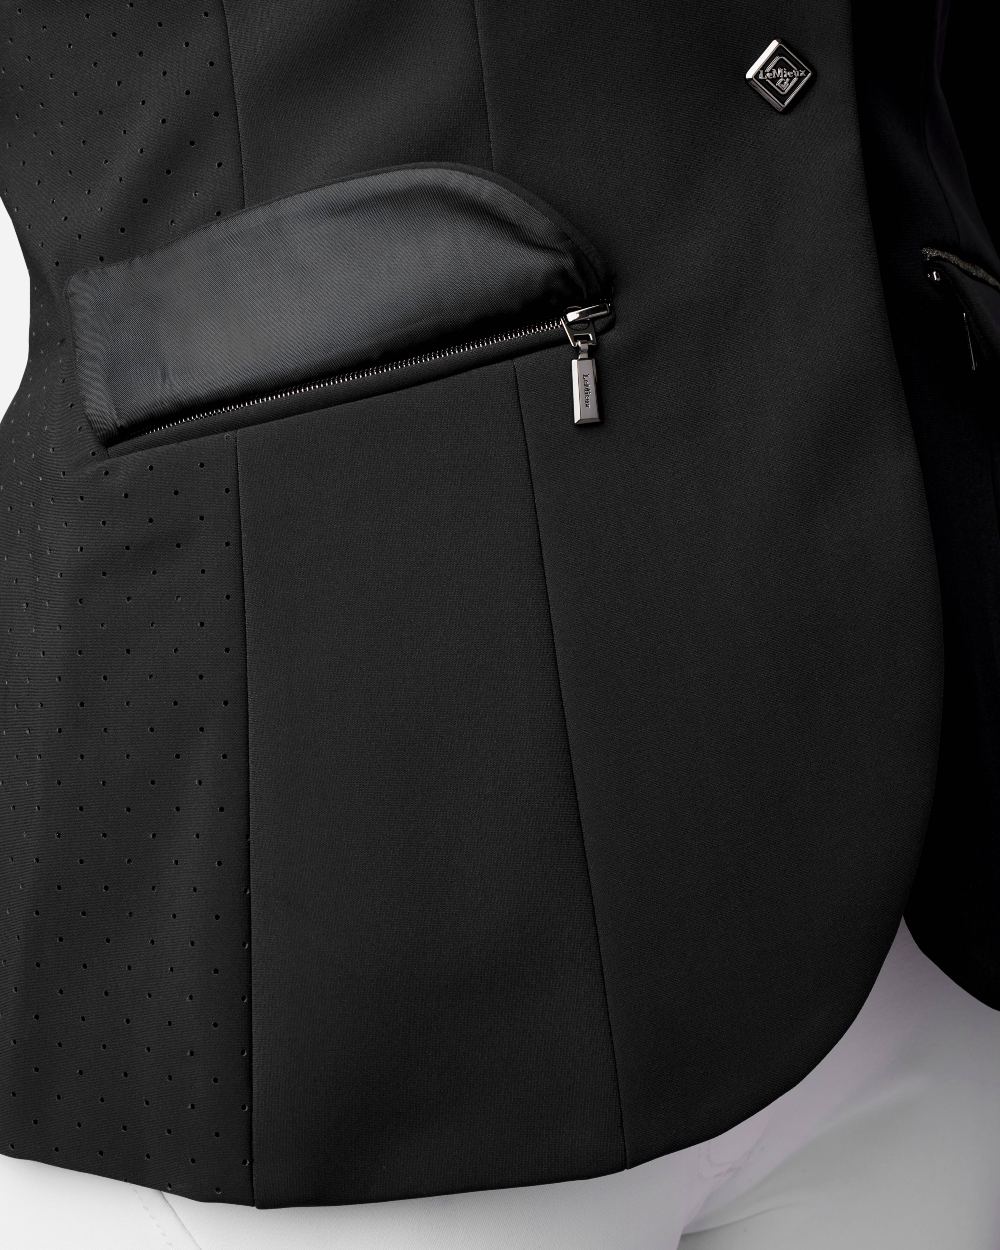 Black coloured LeMieux Dynamique Show Jacket on white background 